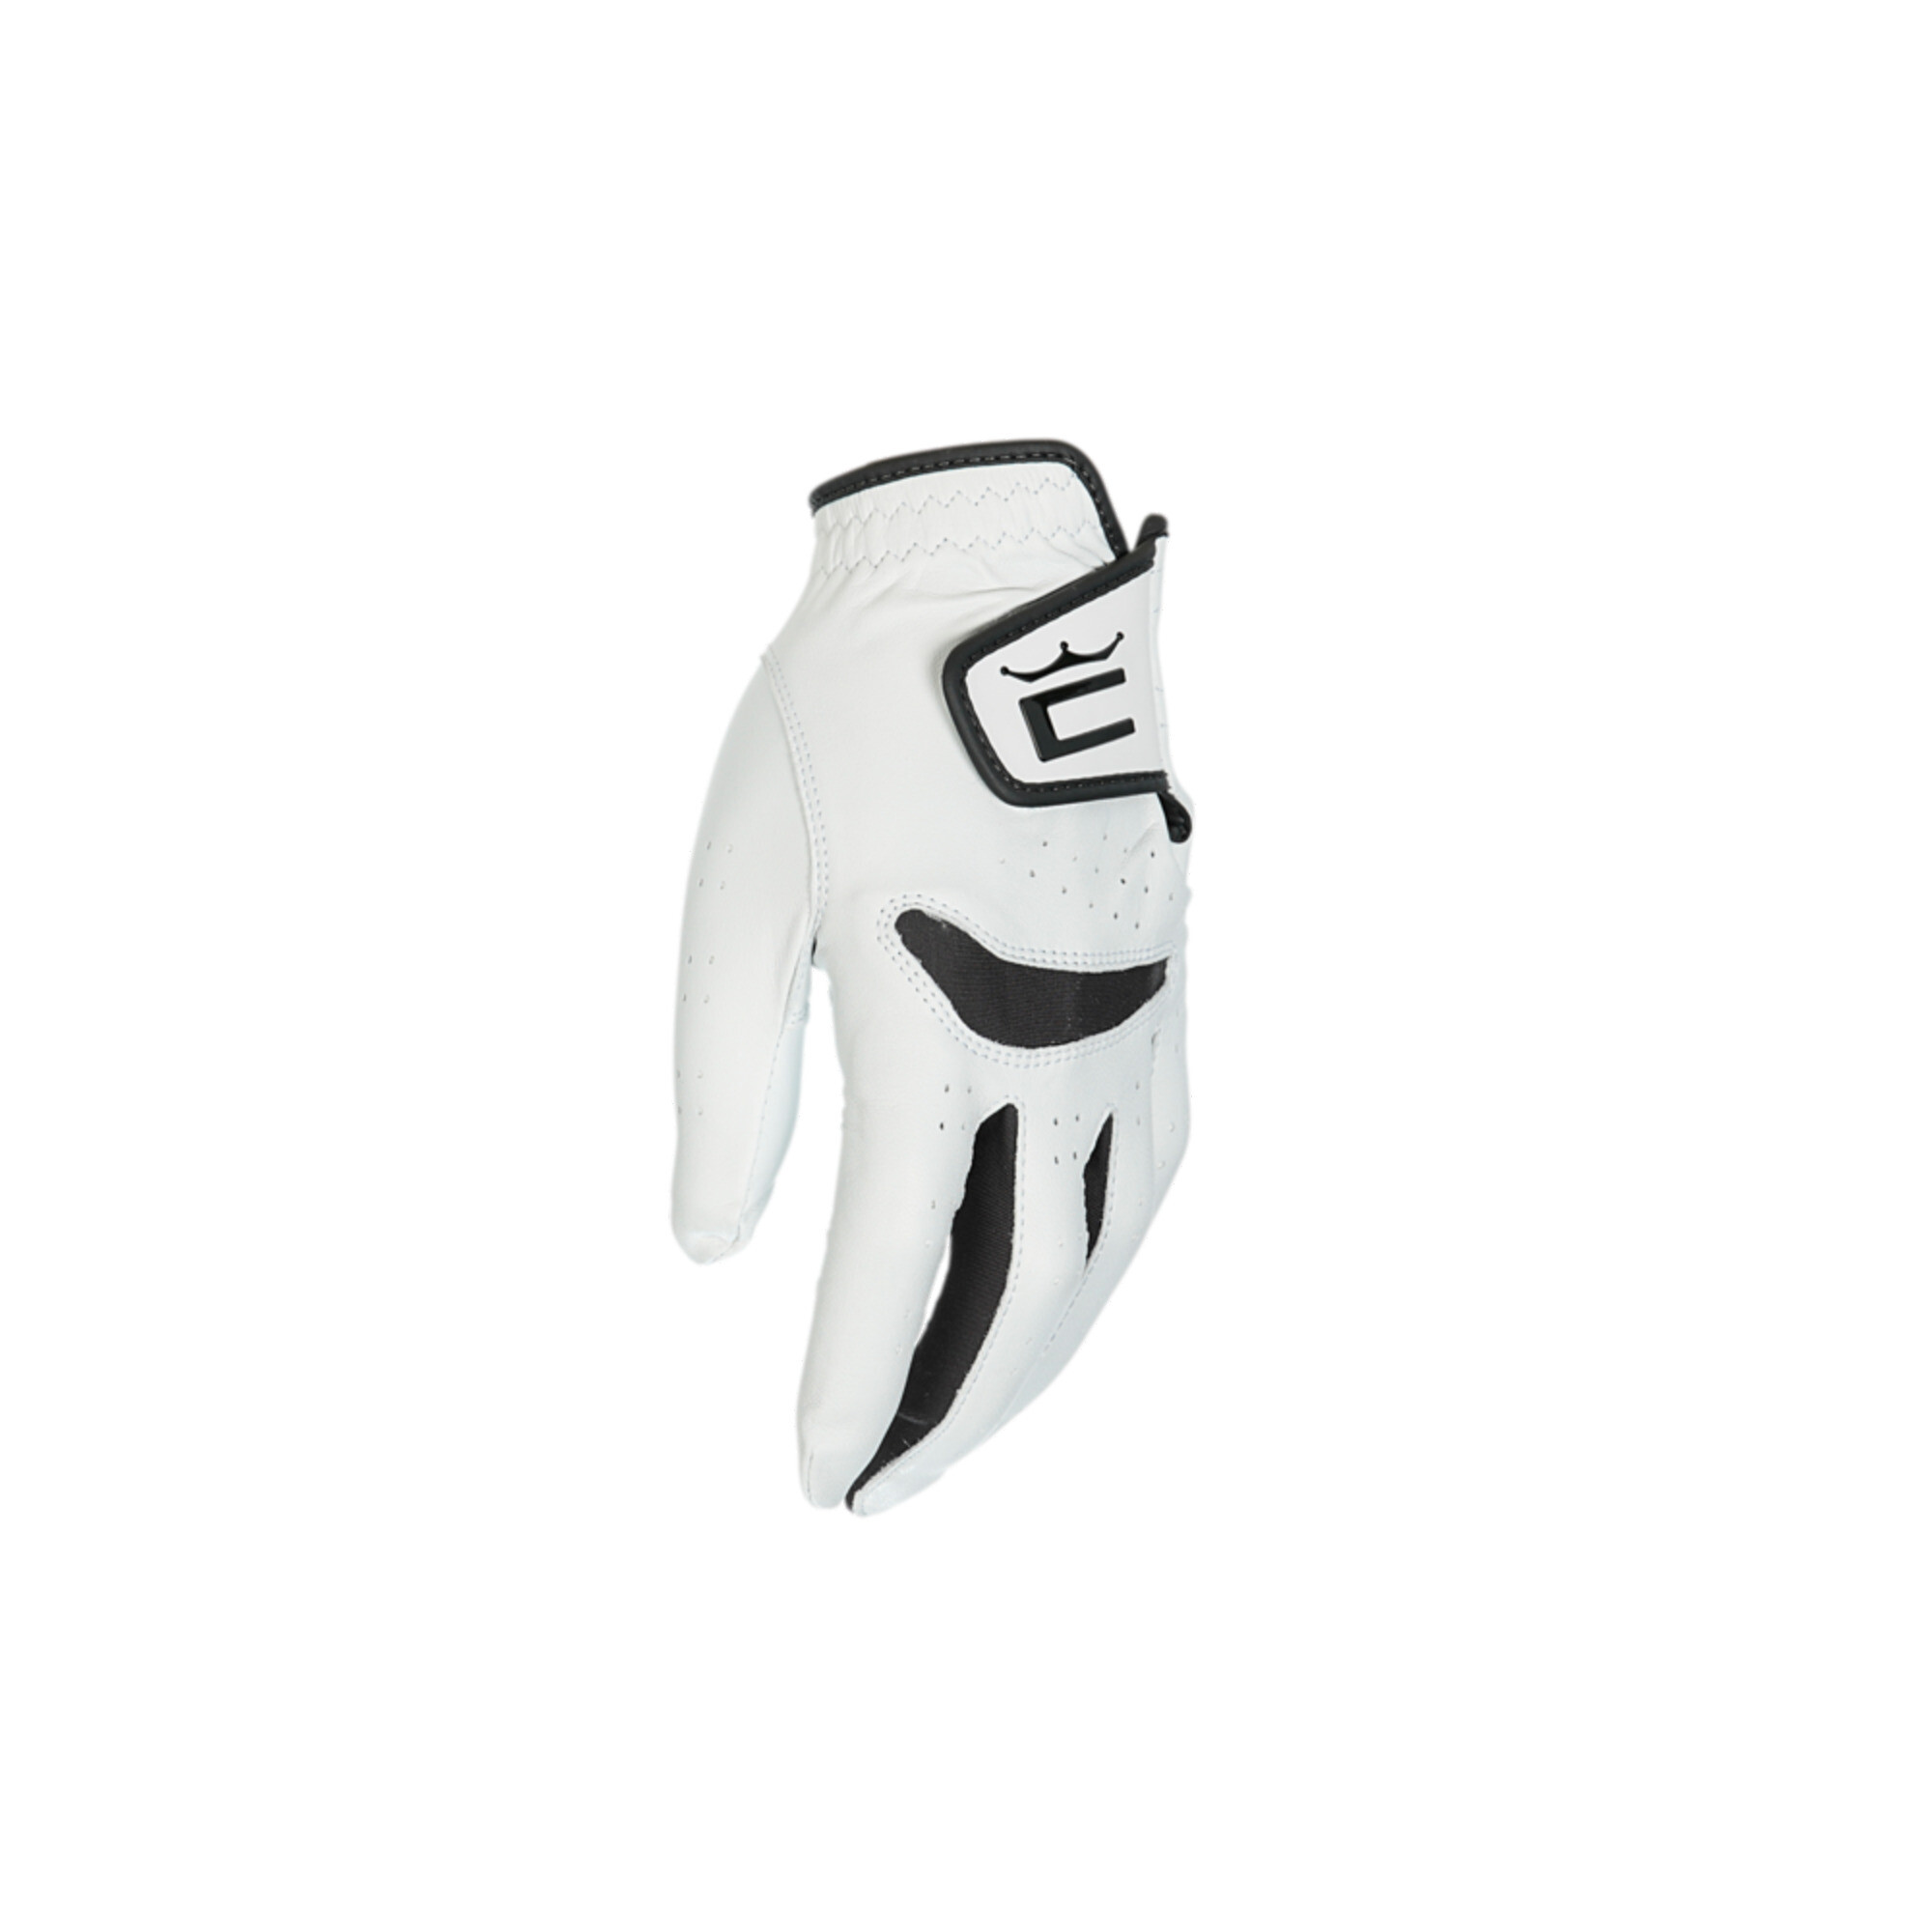 Men's Puma Pur Tech's Left Hand Golf Glove, White, Size M, Accessories